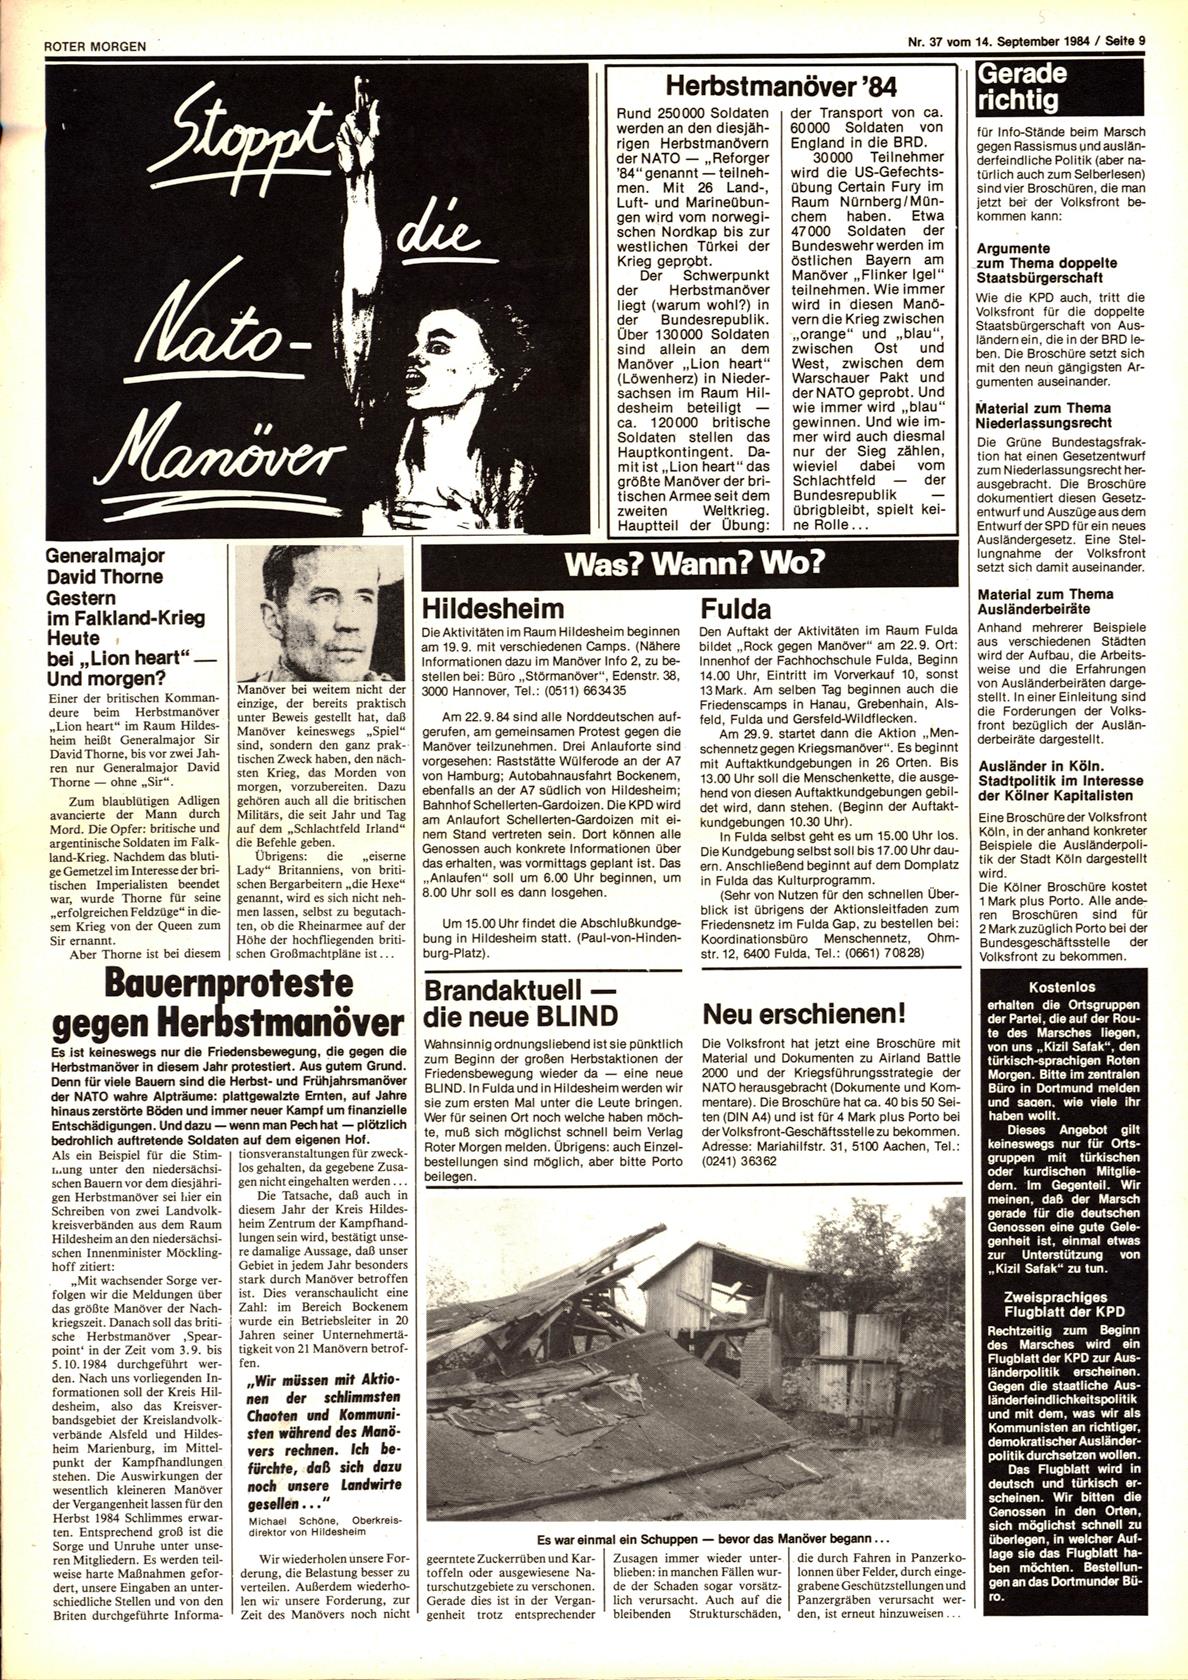 Roter Morgen, 18. Jg., 14. September 1984, Nr. 37, Seite 9